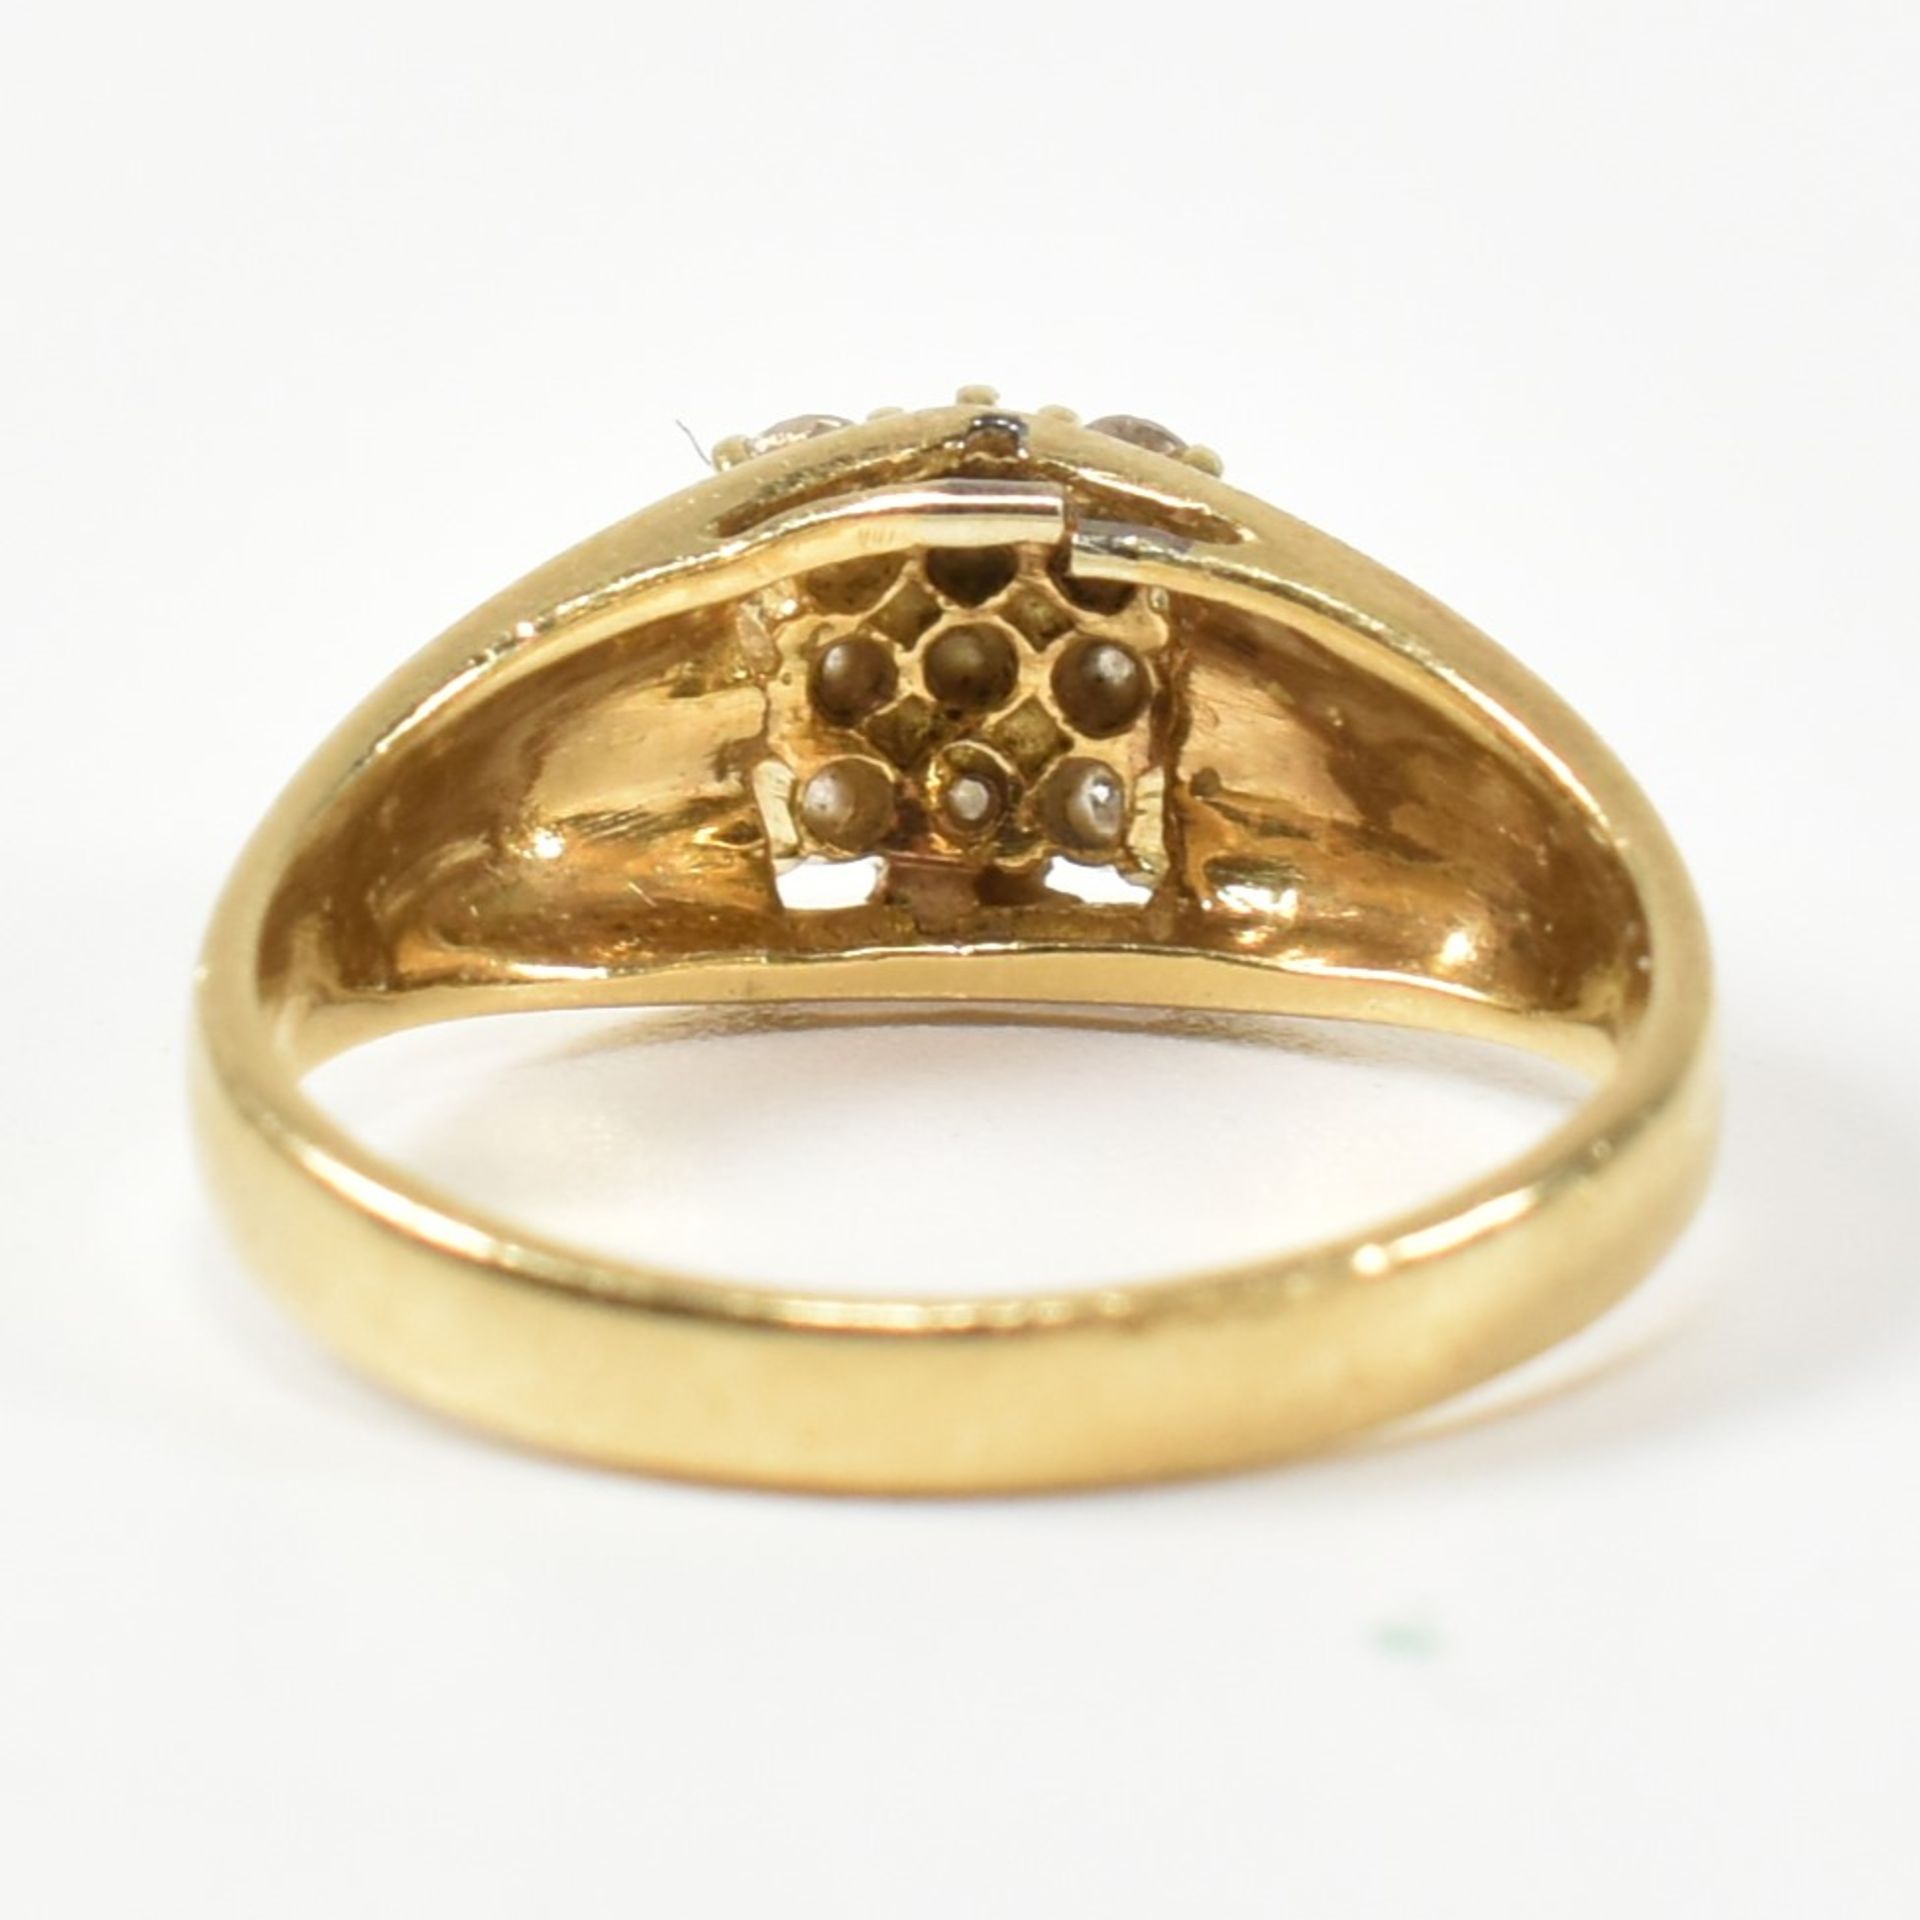 HALLMARKED 18CT GOLD & DIAMOND SIGNET RING - Image 3 of 11